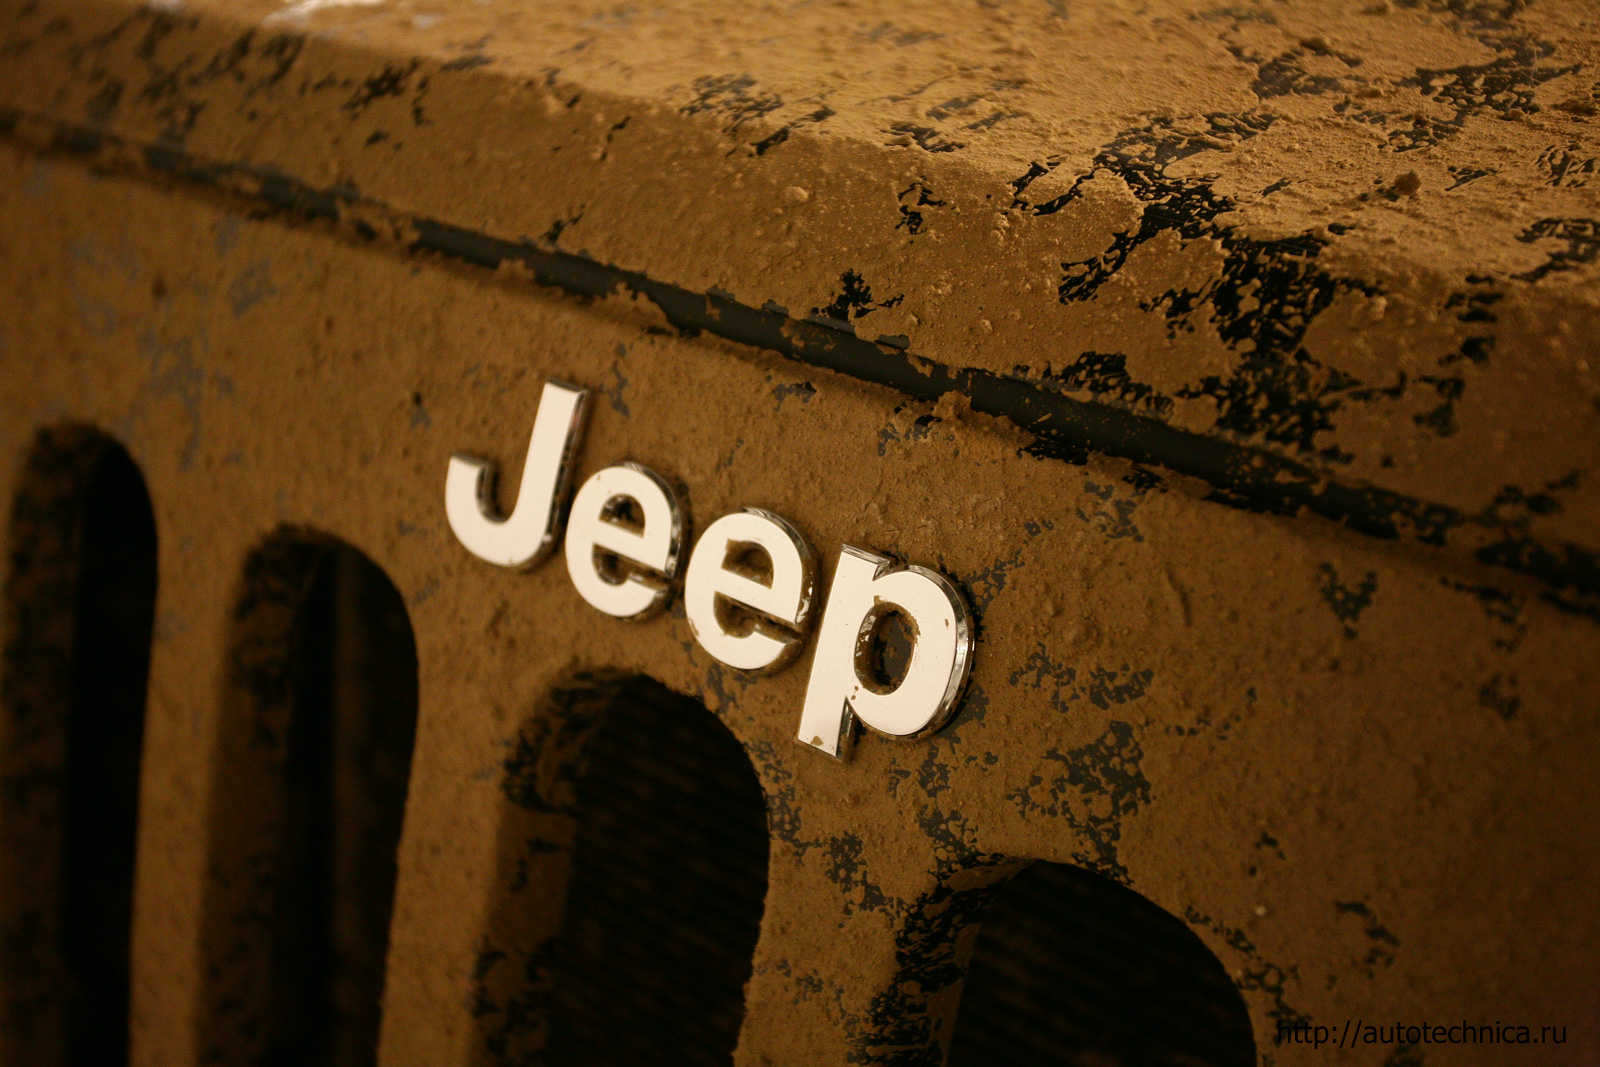 jeep comander